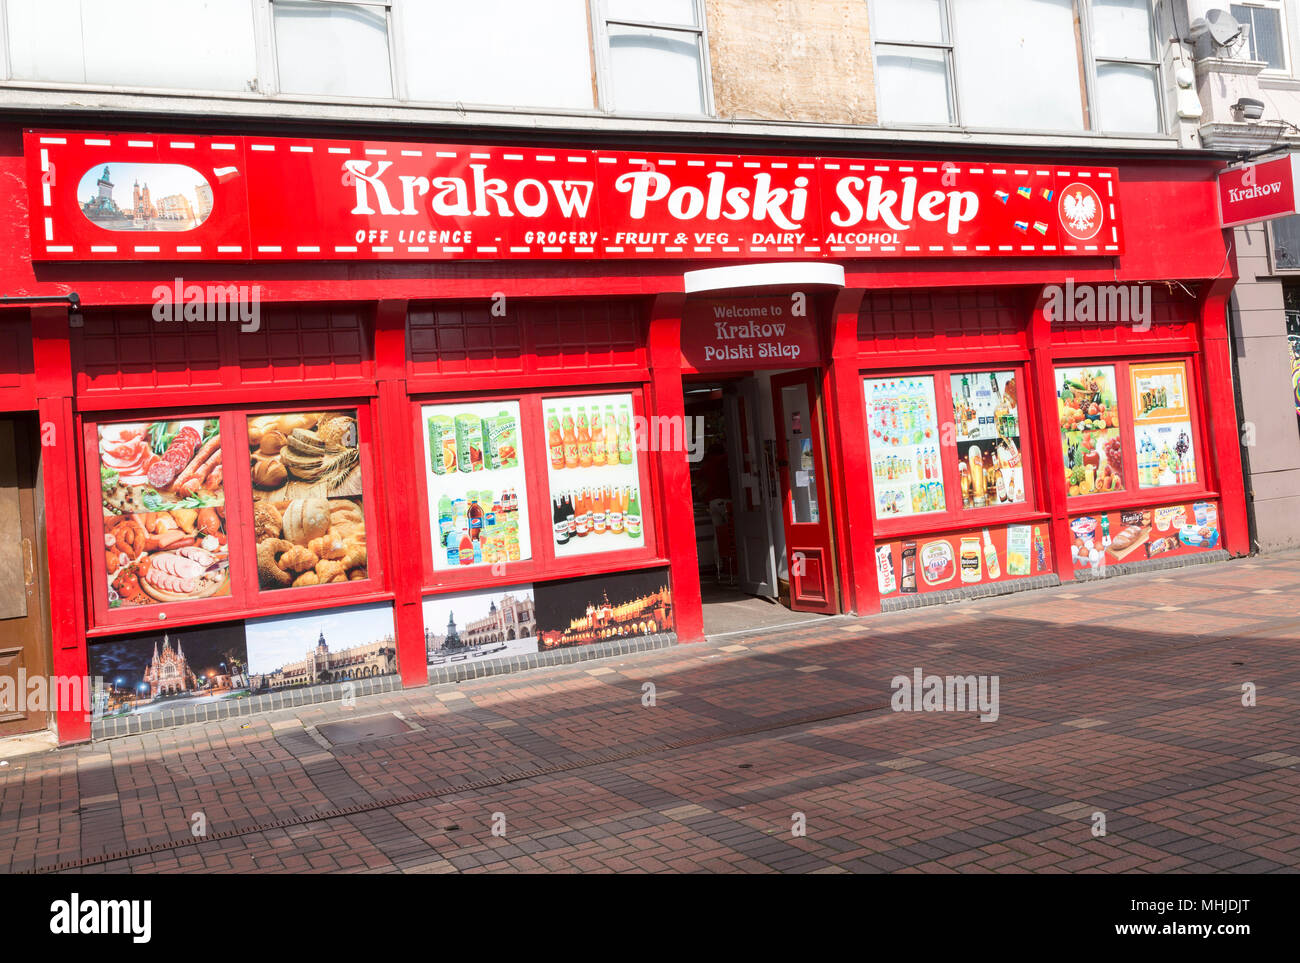 Polish shop, Krakow Polski Sklep, town centre of Swindon, Wiltshire, England, UK Stock Photo